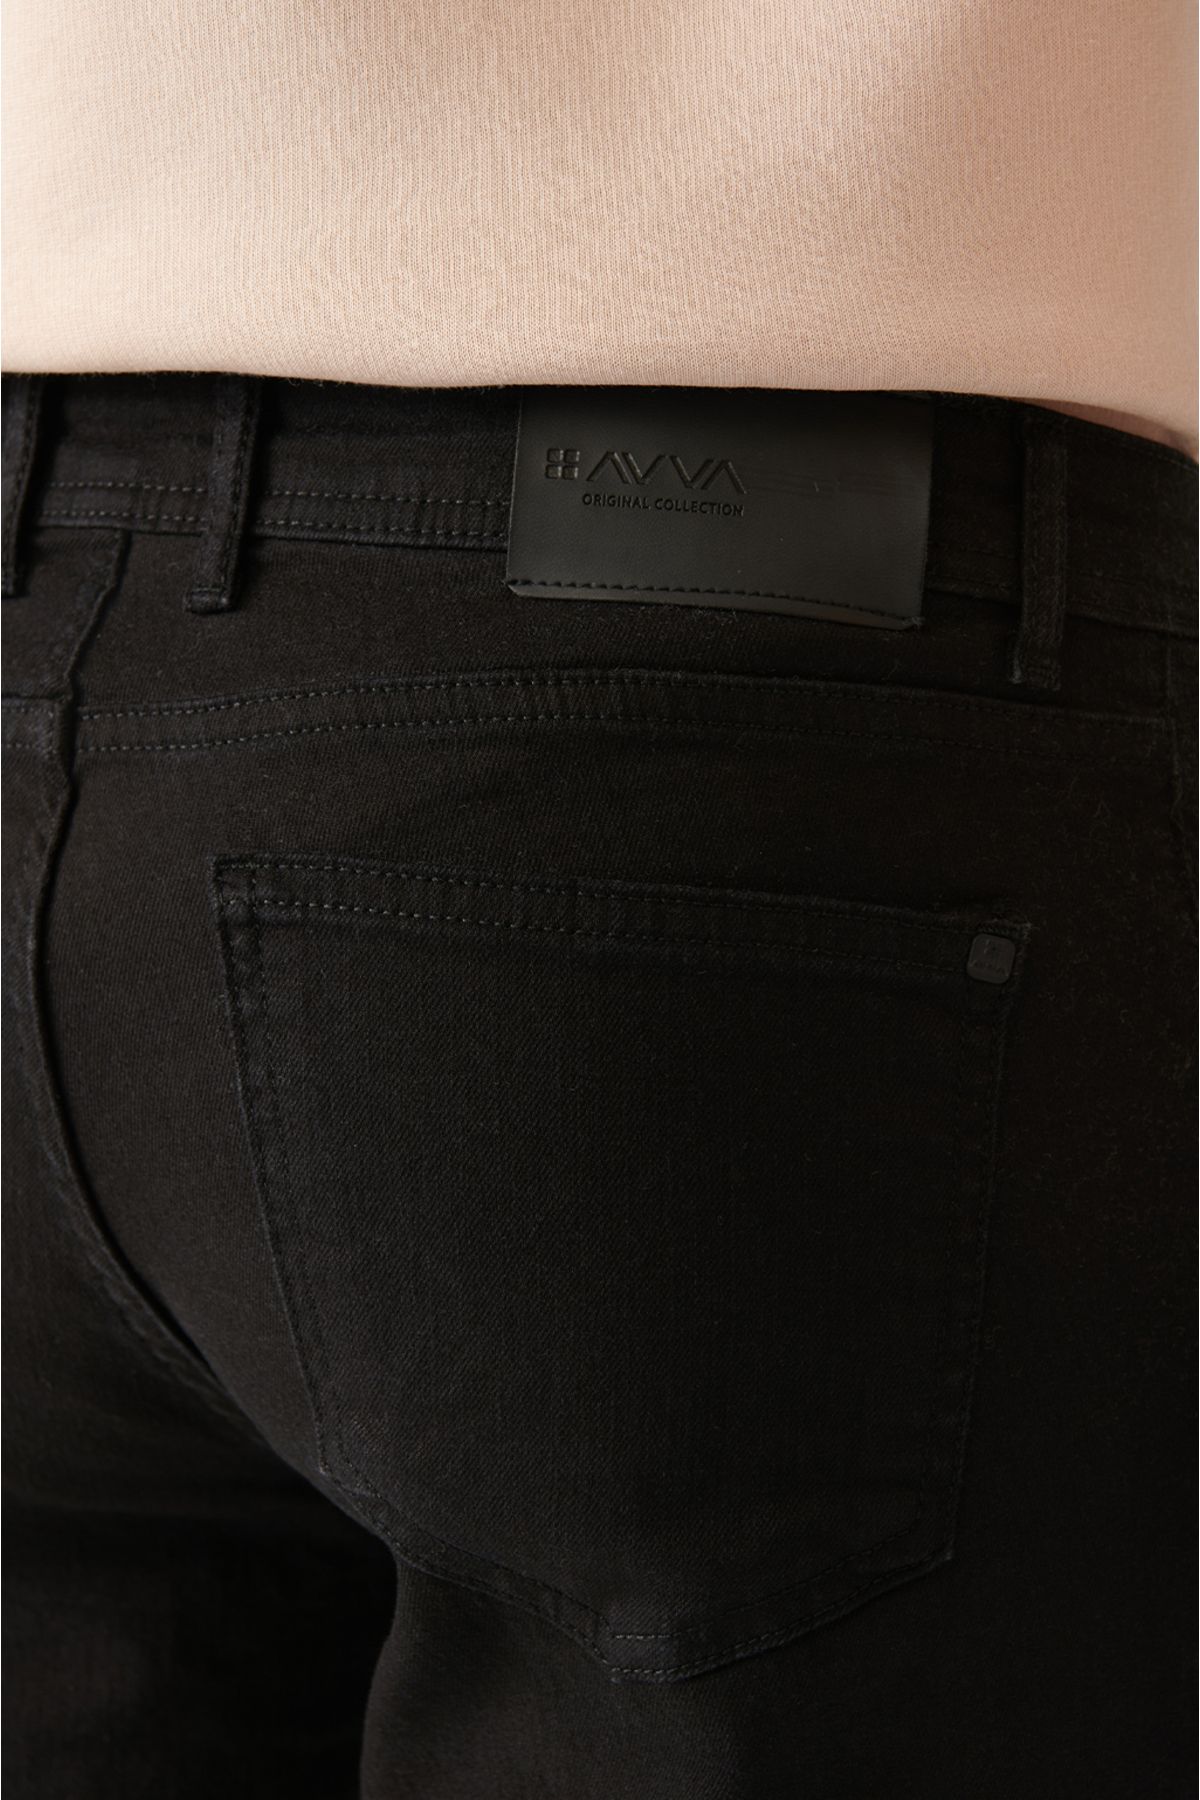 Avva شلوار جین برش معمولی مشکی مردانه با انعطاف پذیری استاندارد B003504